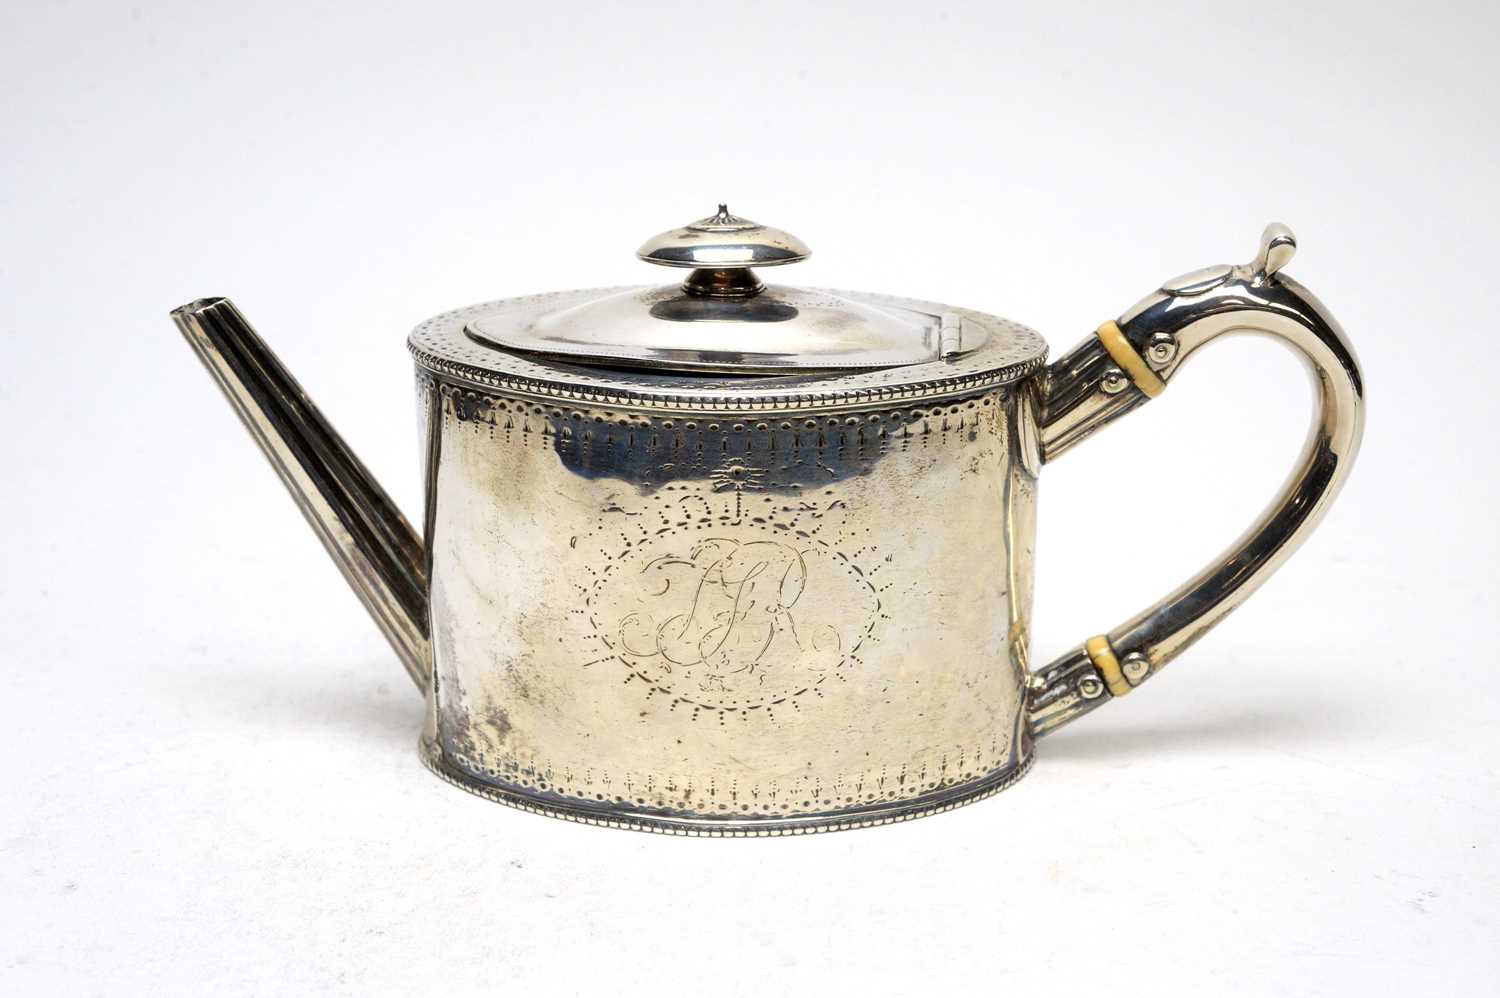 Lot 603 - A George III silver teapot, by John Langlands and John Robertson